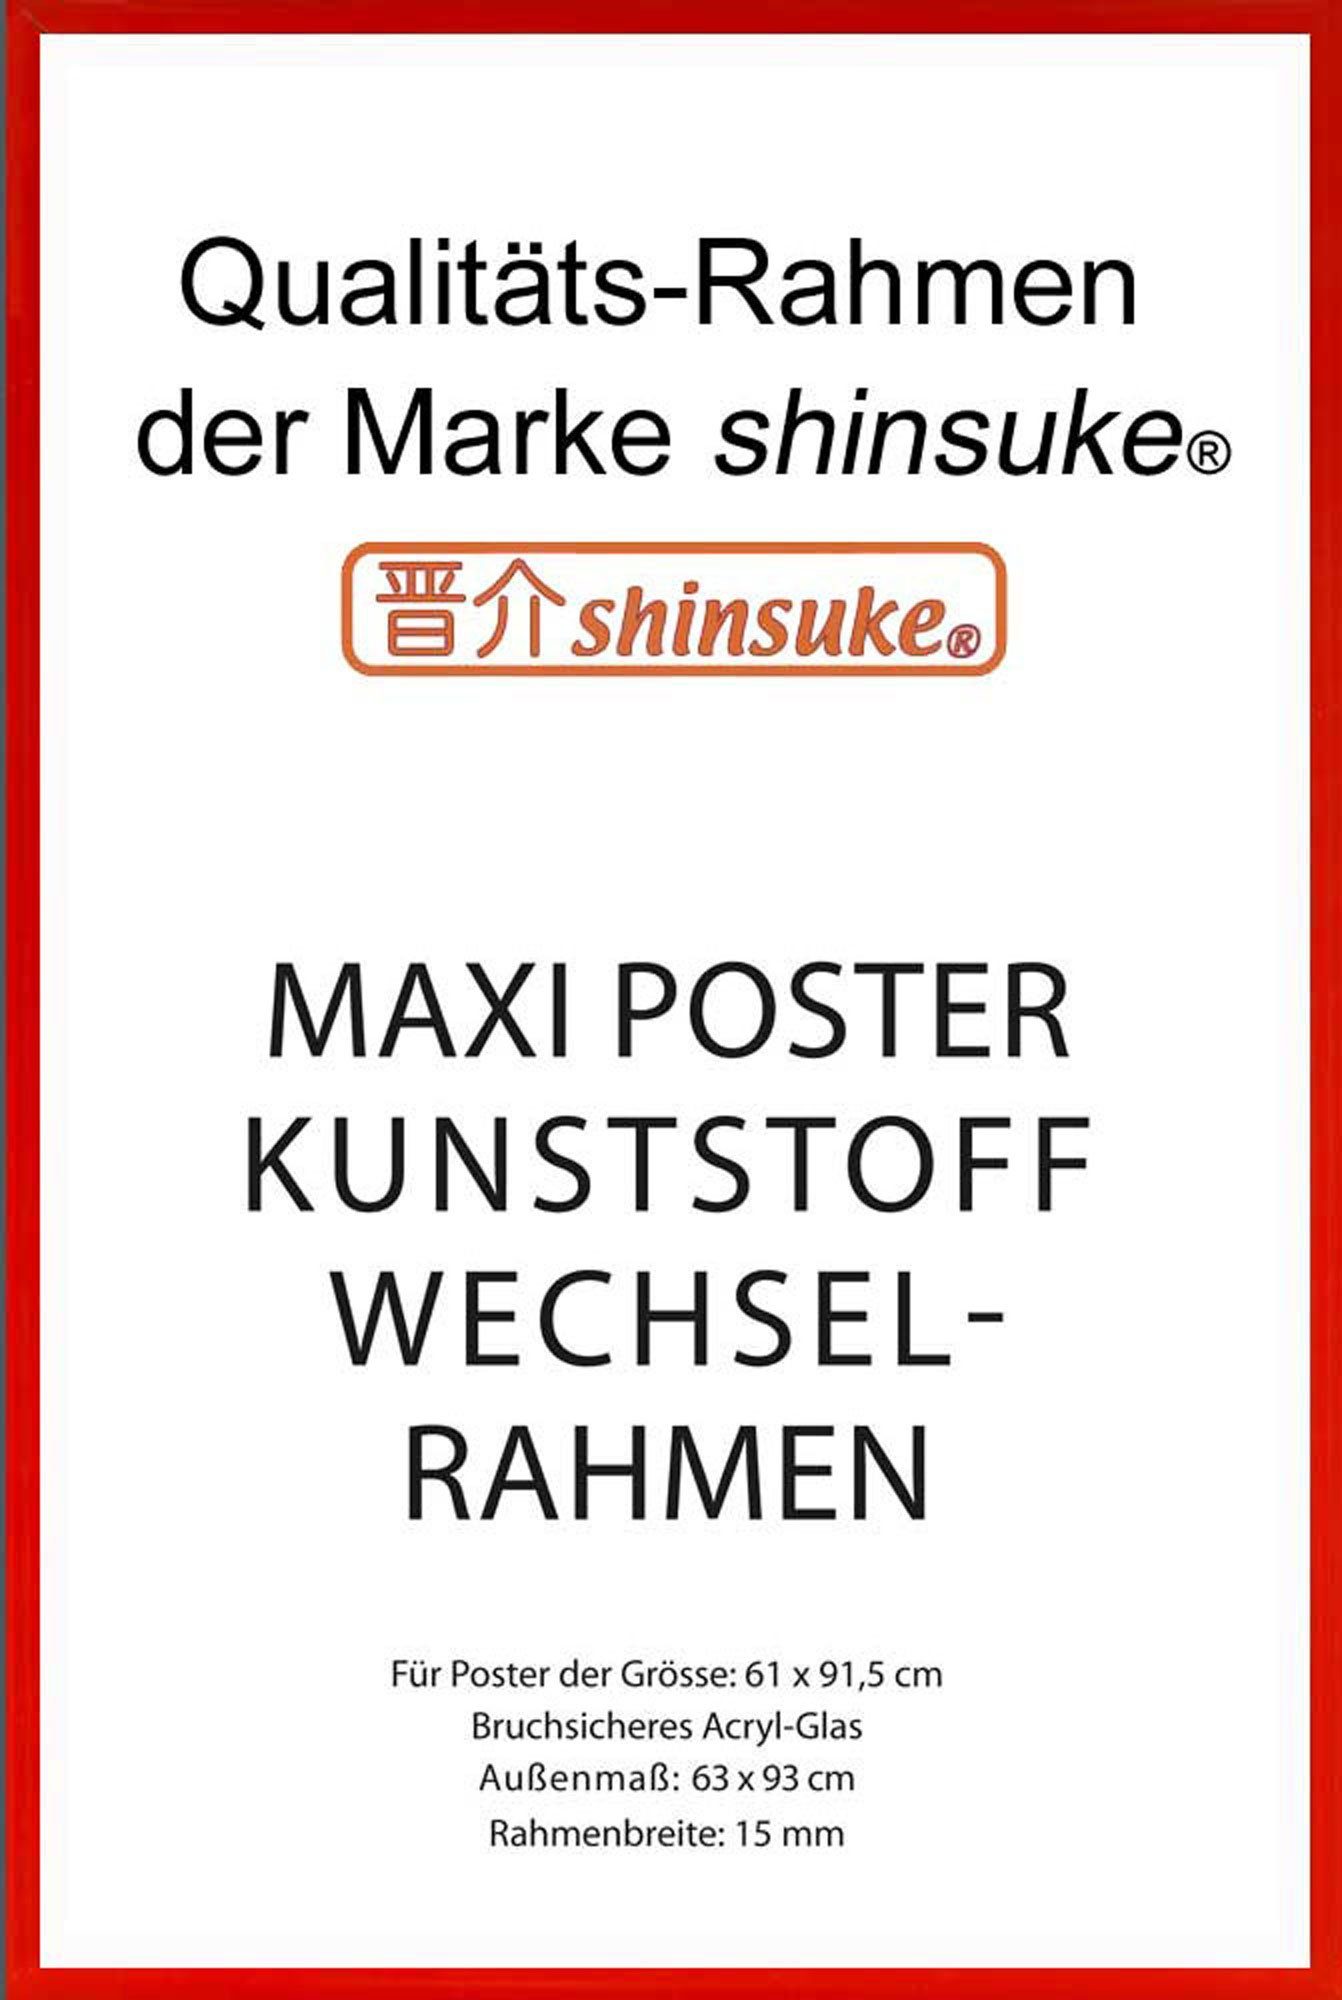 61x91,5cm, Maxi-Poster Rahmen mit Kunststoff empireposter Acryl-Scheibe Profil: Farbe rot Wechselrahmen 15mm Posterrahmen Shinsuke®